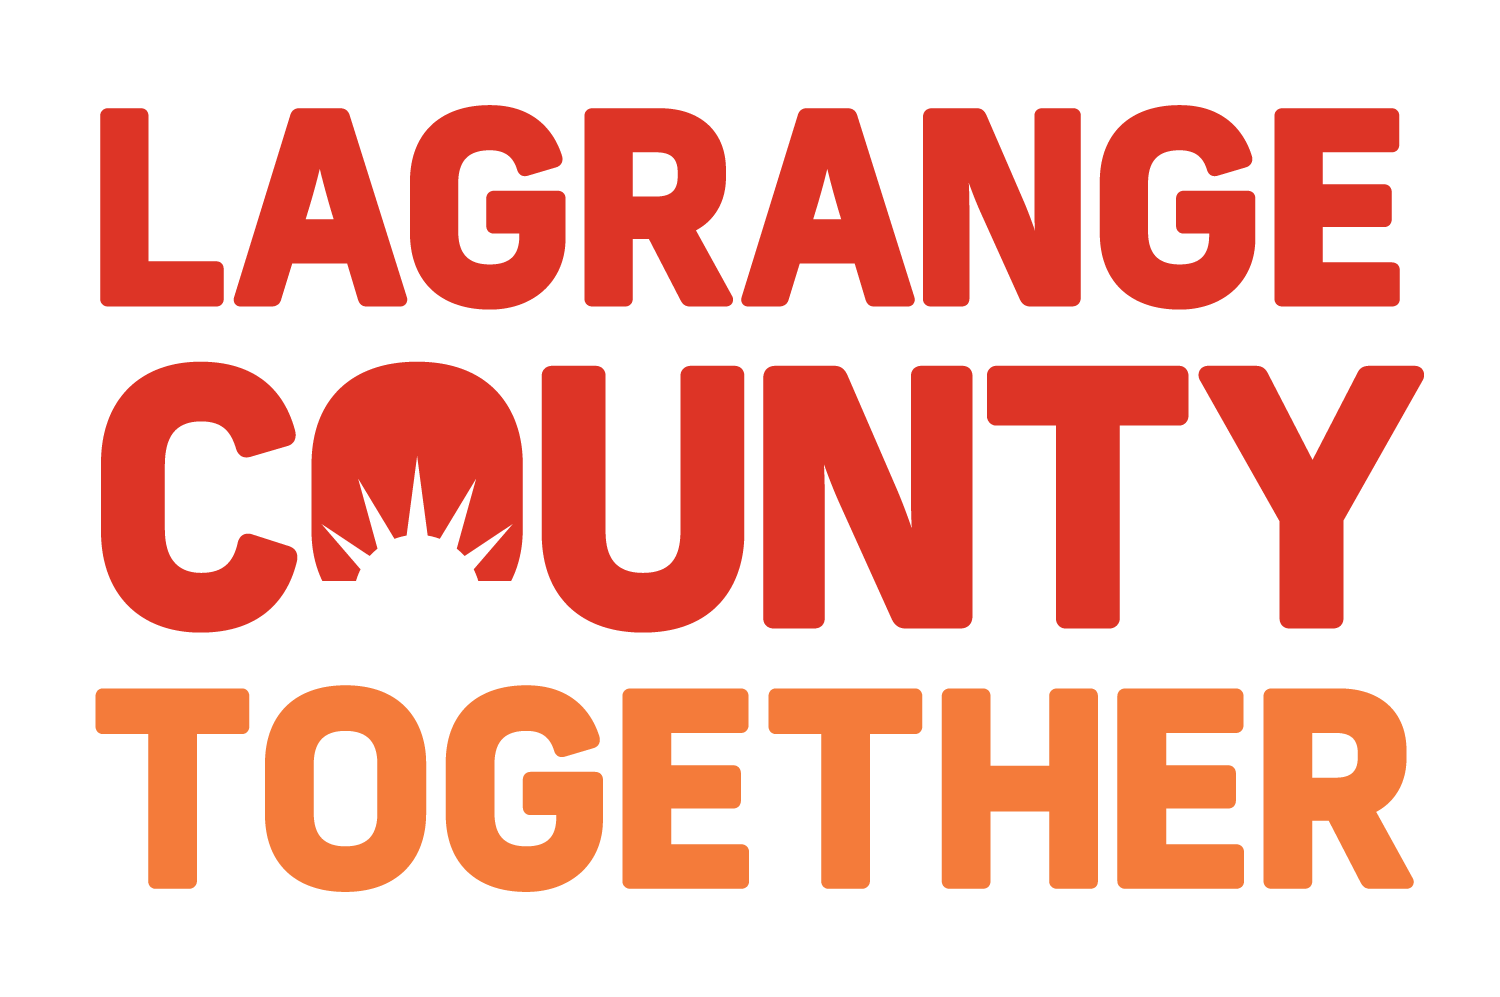 LaGrange County Together